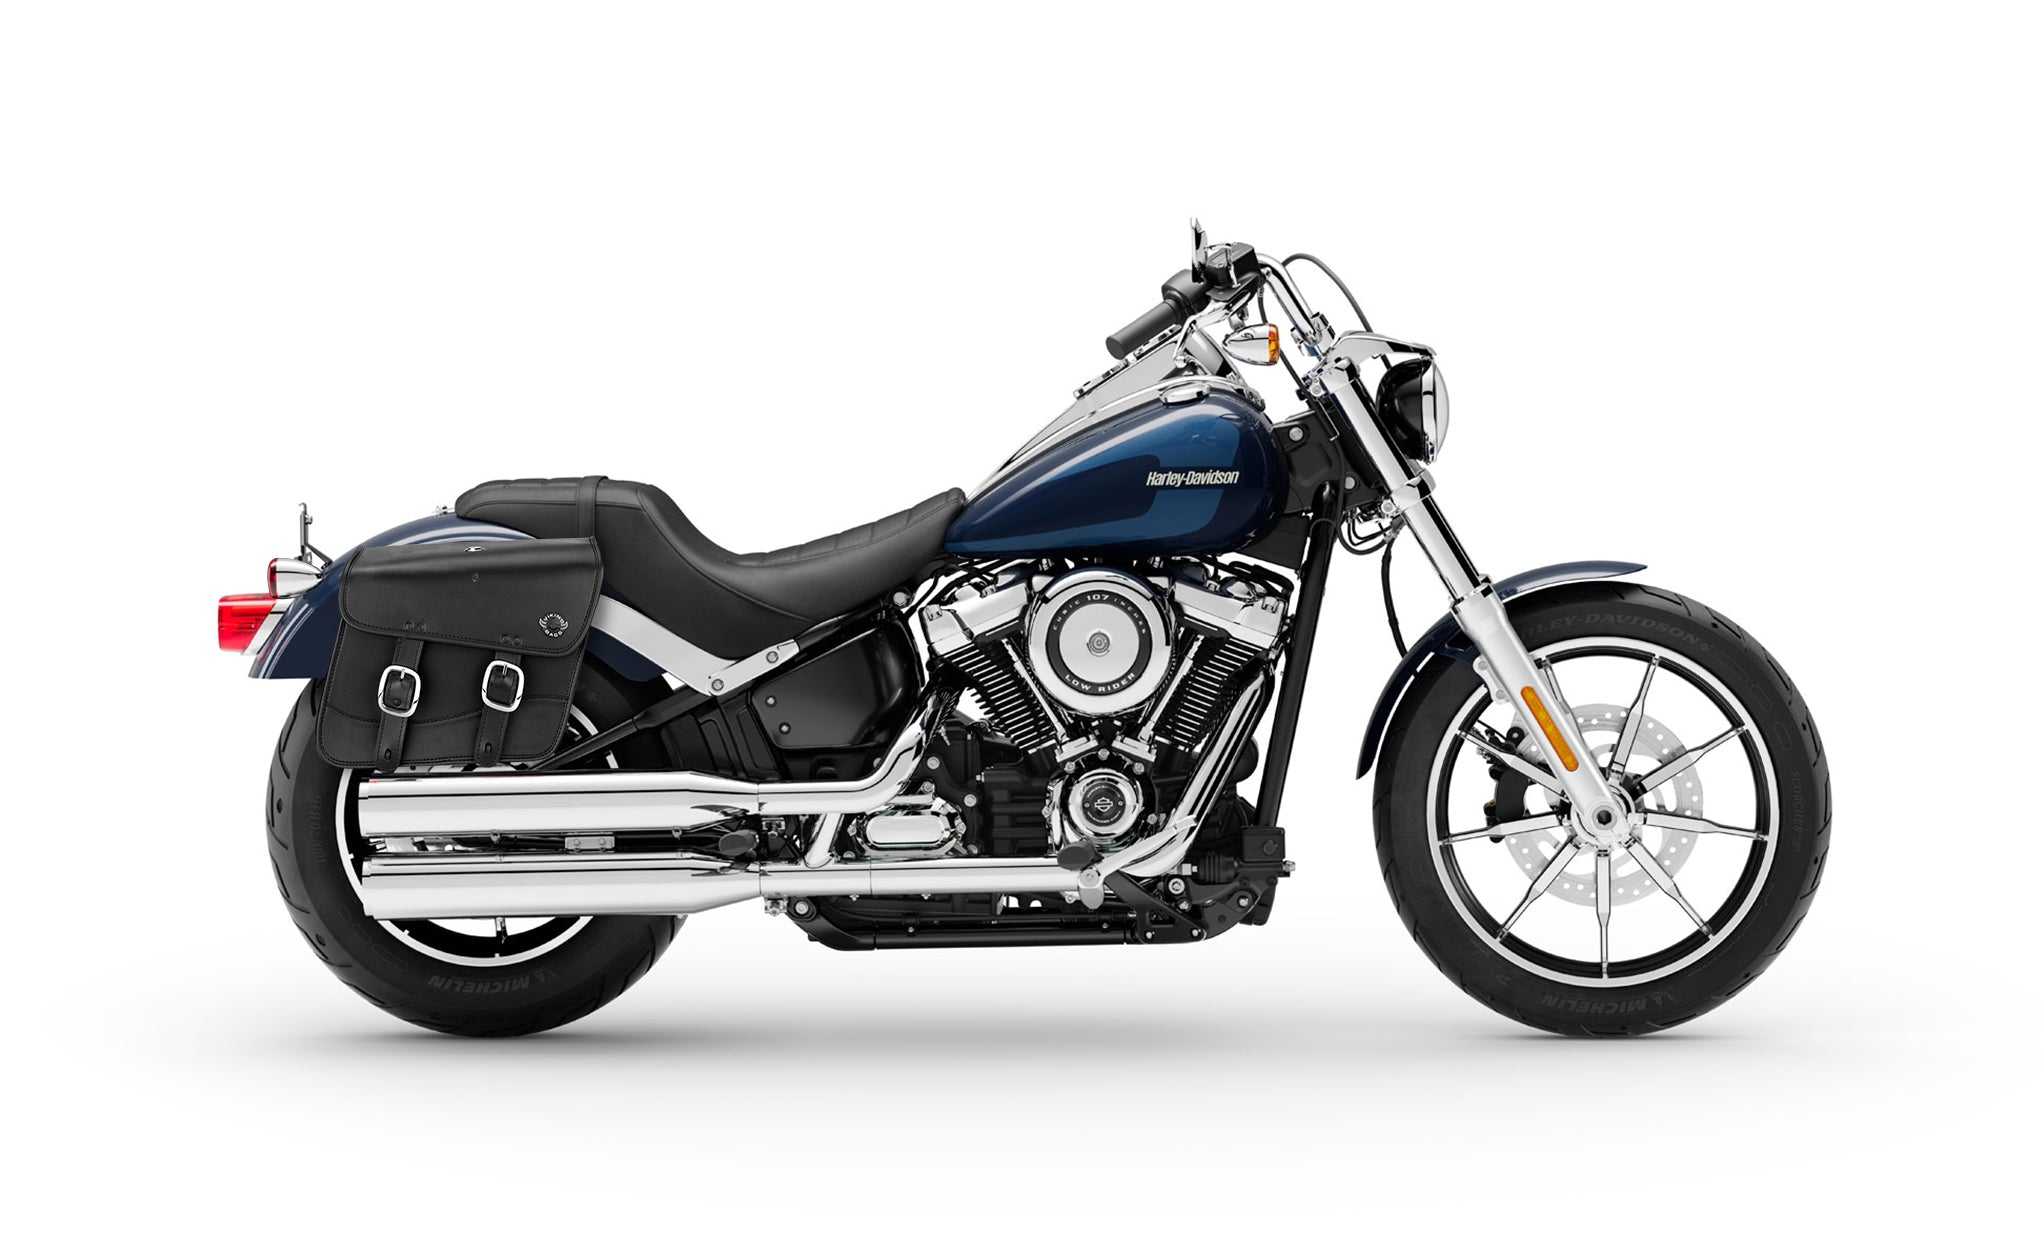 Viking Thor Medium Leather Motorcycle Saddlebags For Harley Davidson Softail Low Rider Fxlr on Bike Photo @expand